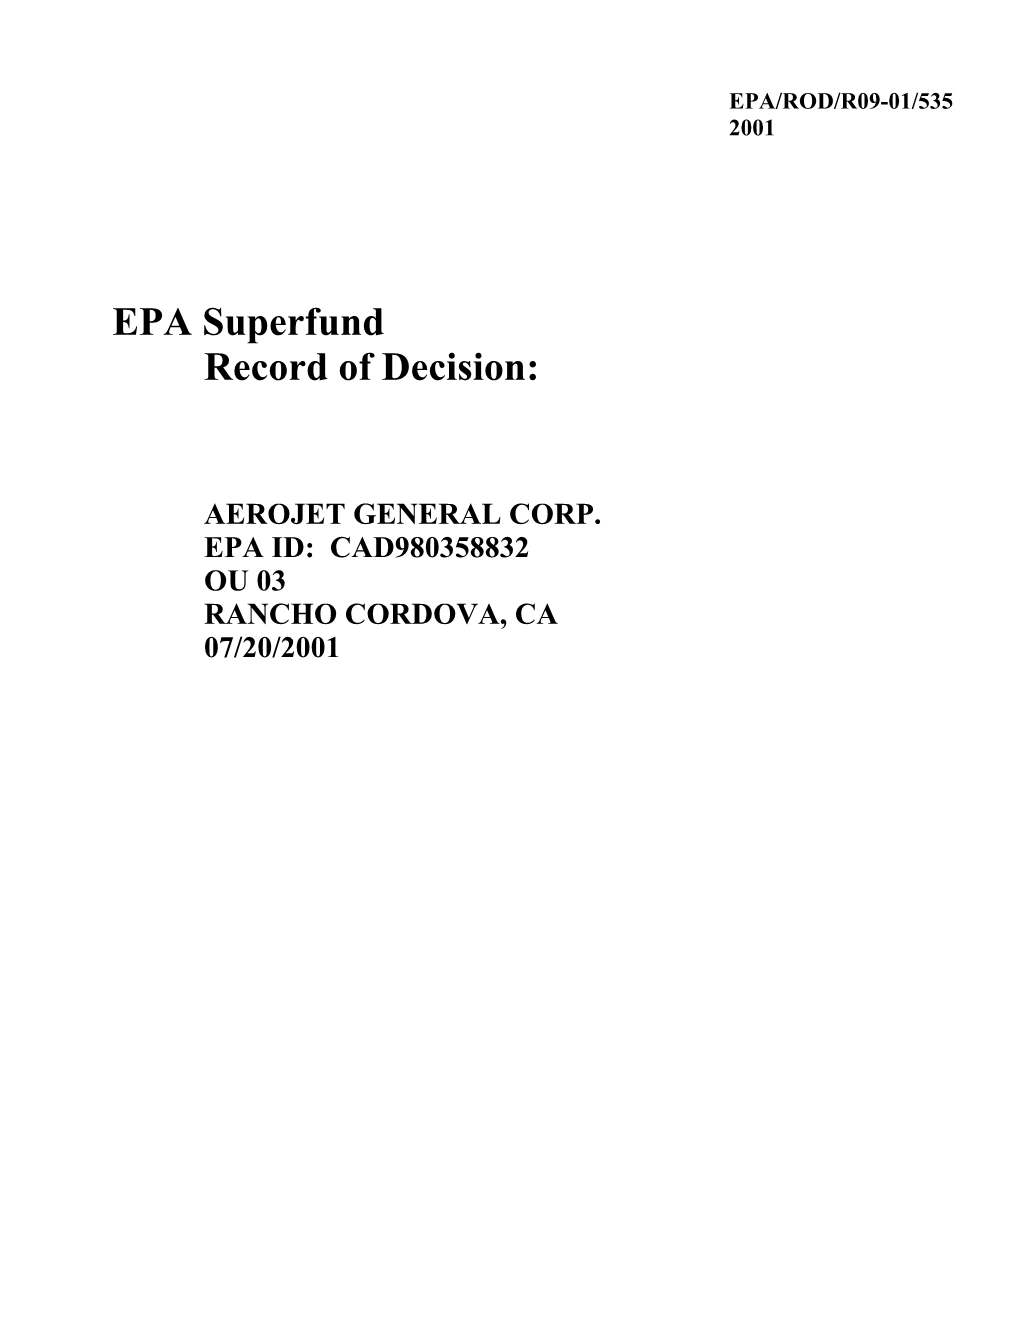 Aerojet General Corp. Epa Id: Cad980358832 Ou 03 Rancho Cordova, Ca 07/20/2001 Record of Decision